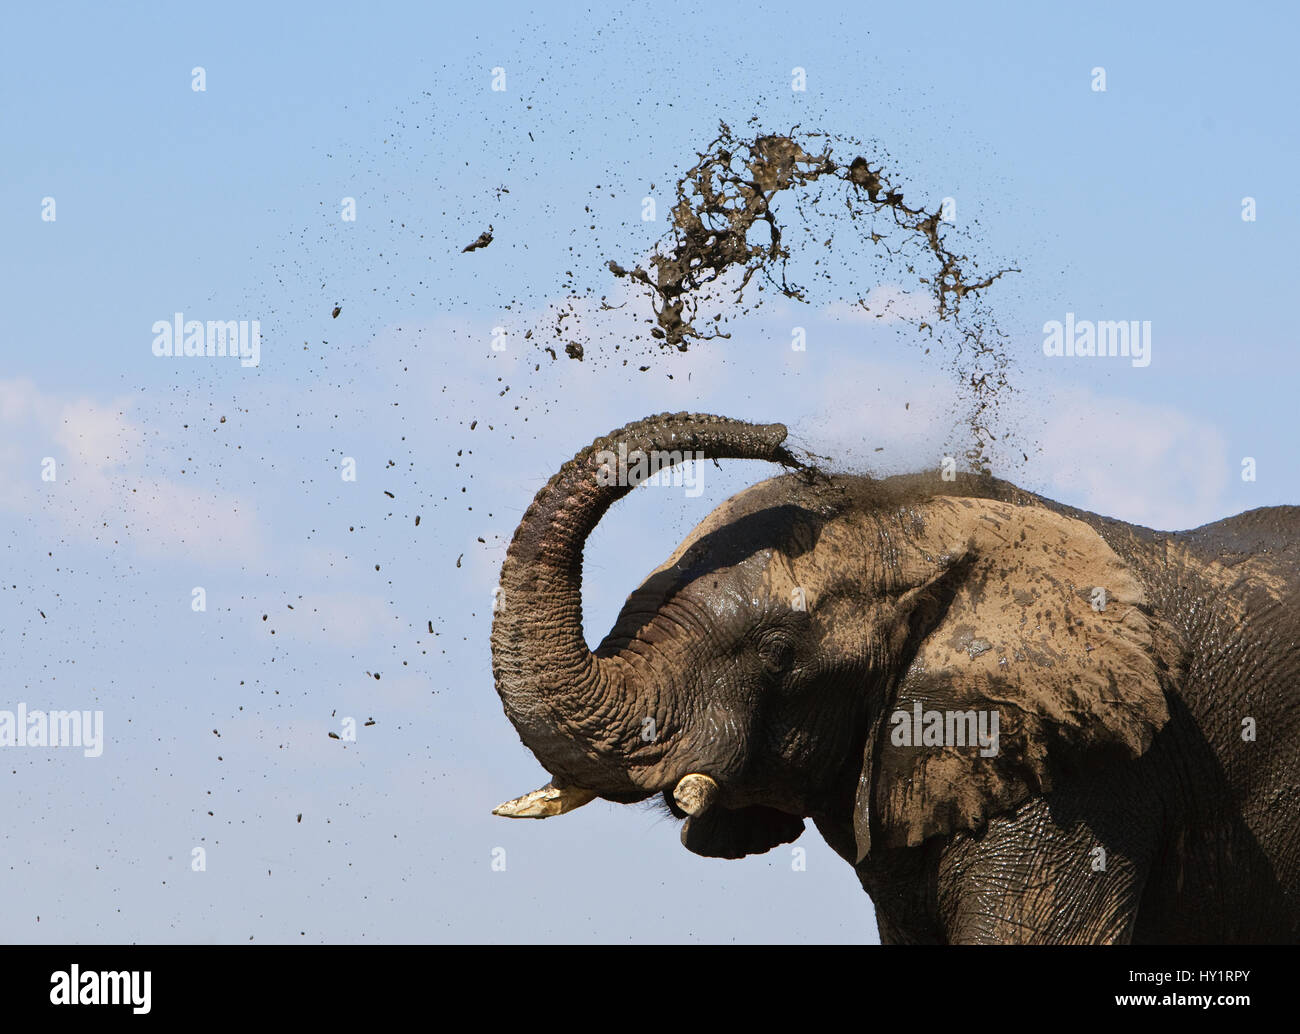 Afrikanischer Elefant (Loxodonta Africana) Spritzen Schlamm, um abzukühlen, Etosha Nationalpark, Namibia, Juni. Vom Aussterben bedrohte Arten. Stockfoto